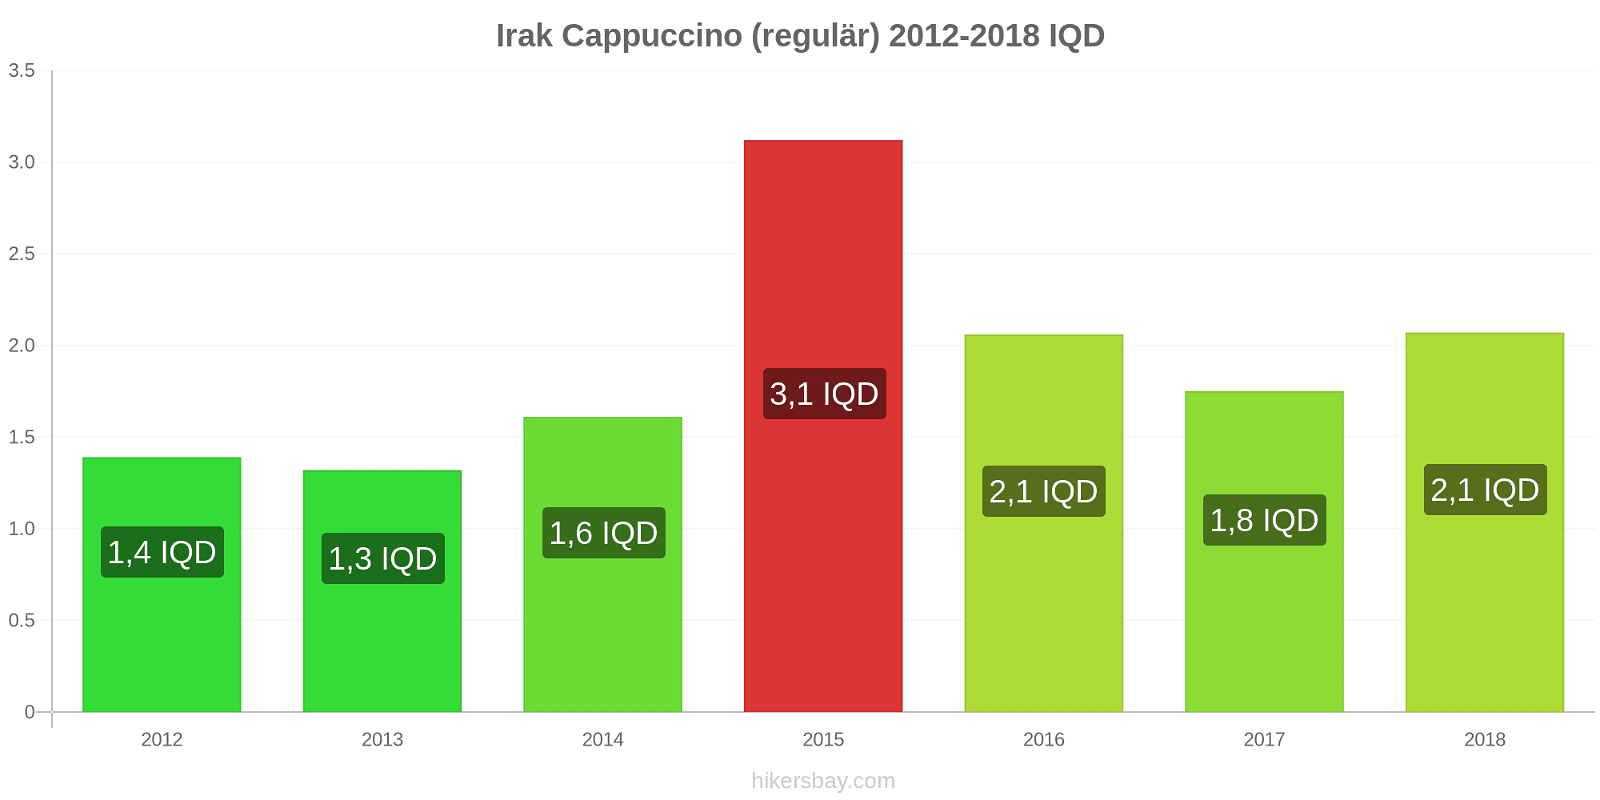 Irak Preisänderungen Cappuccino (regulär) hikersbay.com